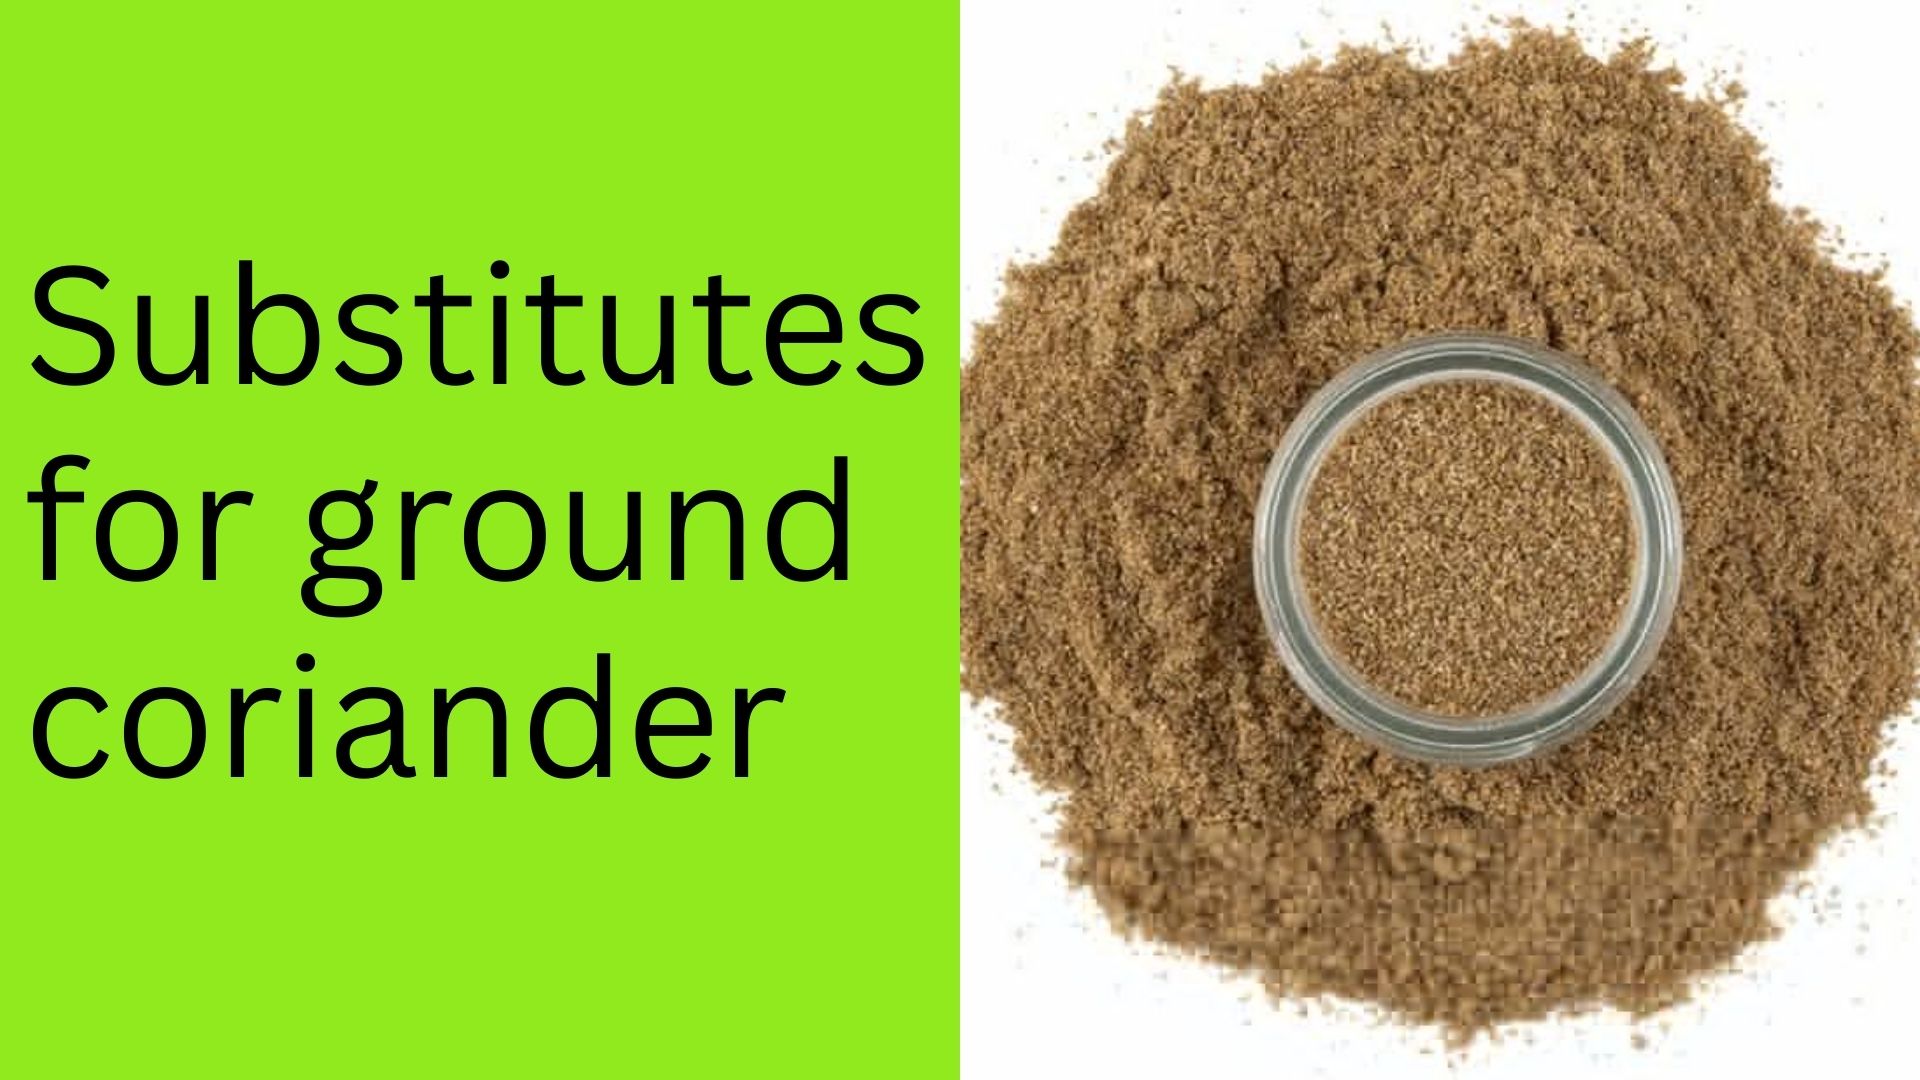 Substitutes for ground coriander